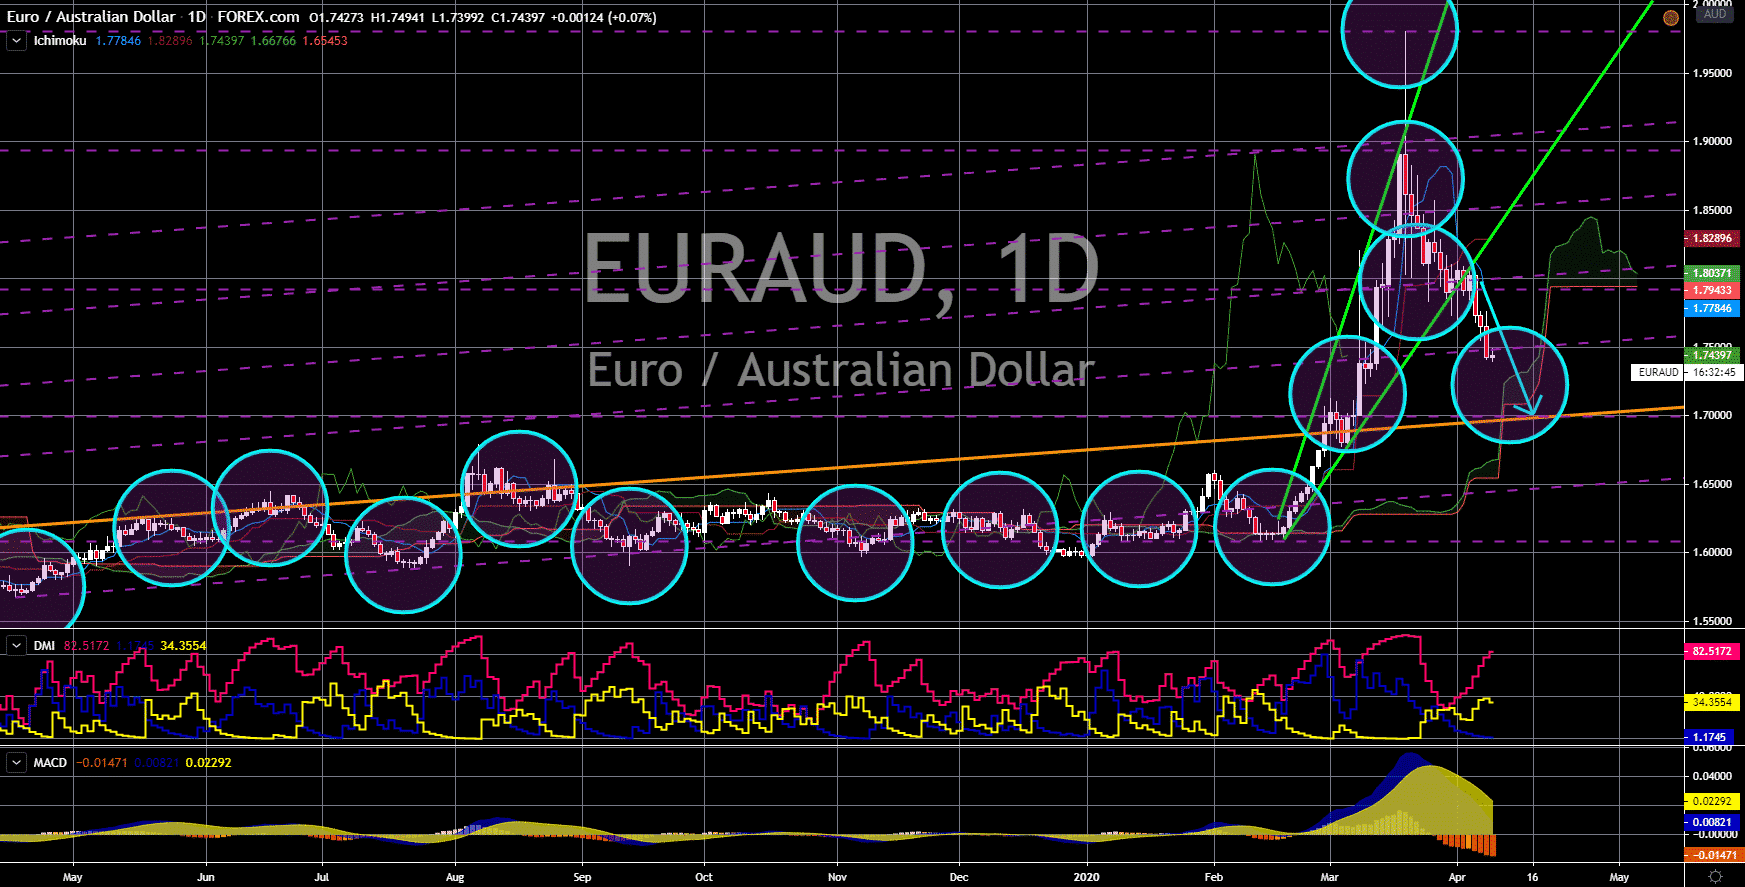 FinanceBrokerage - Notícias do Mercado: Gráfico EUR/AUD